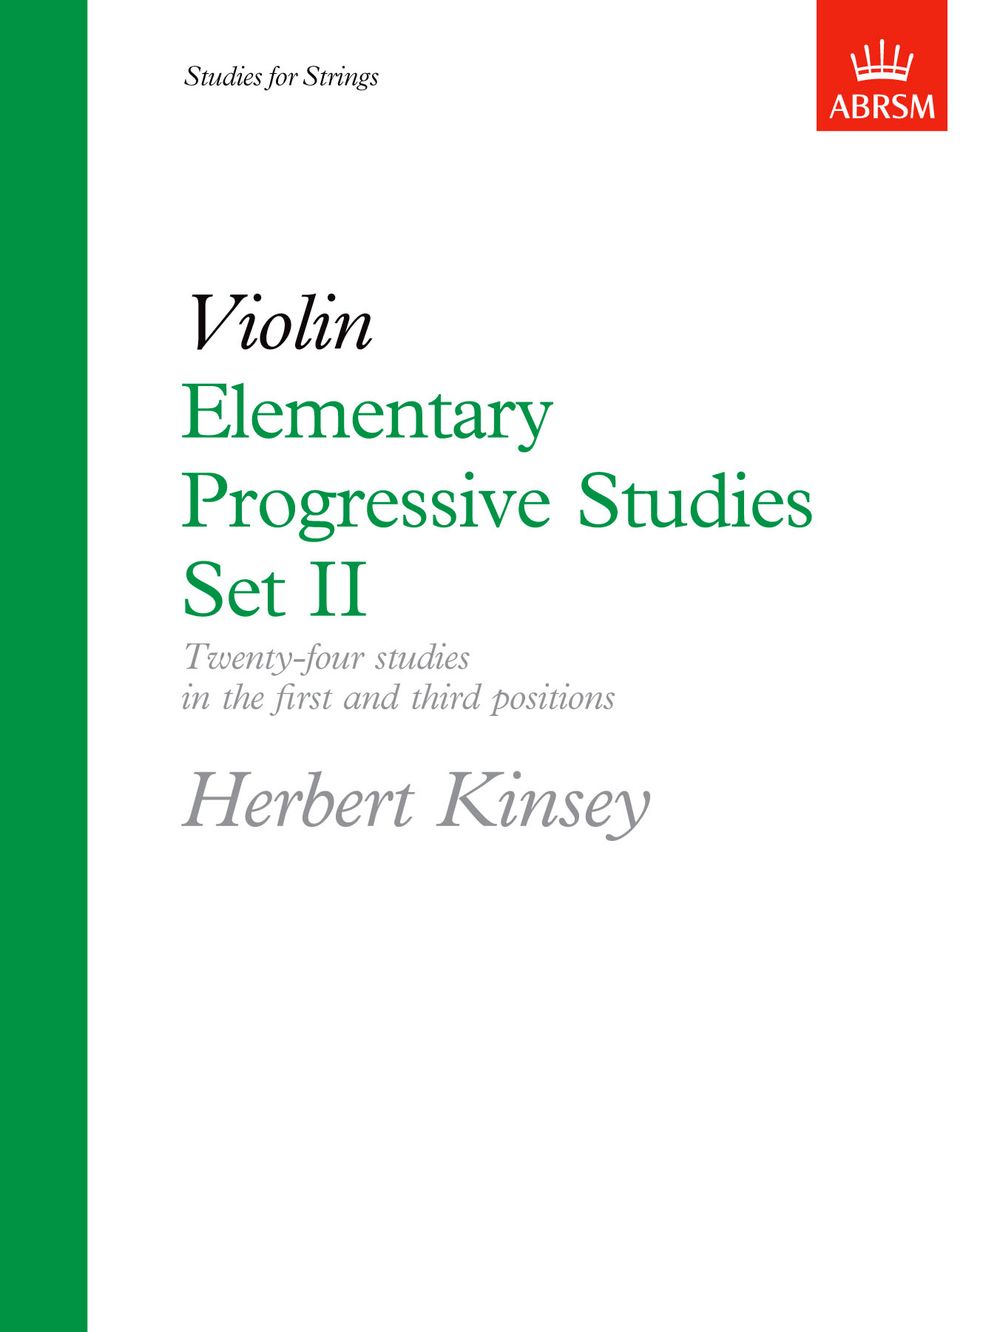 Elementary Progressive Studies: Violin Set 2